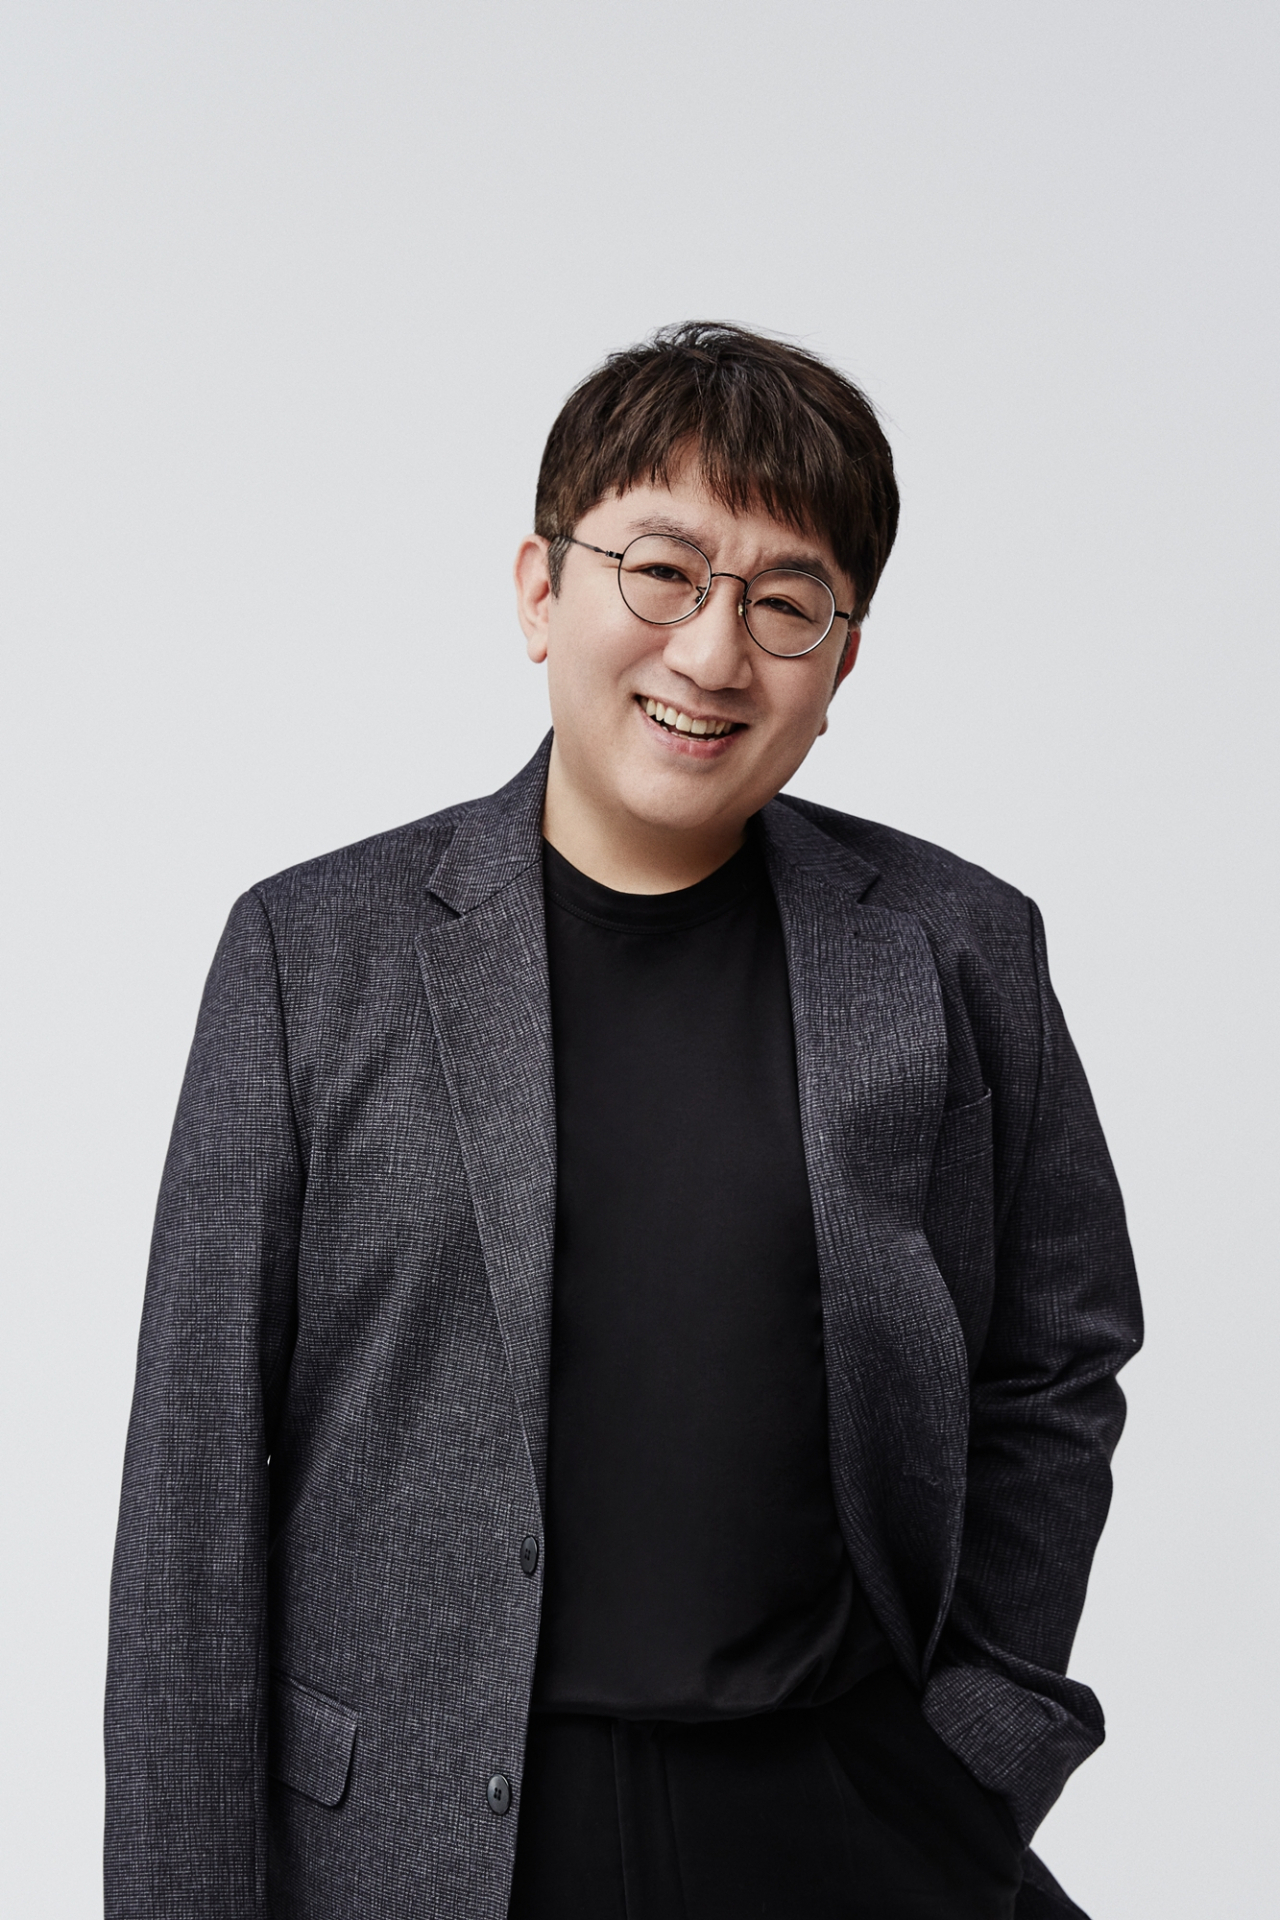 Hybe Chairman Bang Si-hyuk (Hybe)